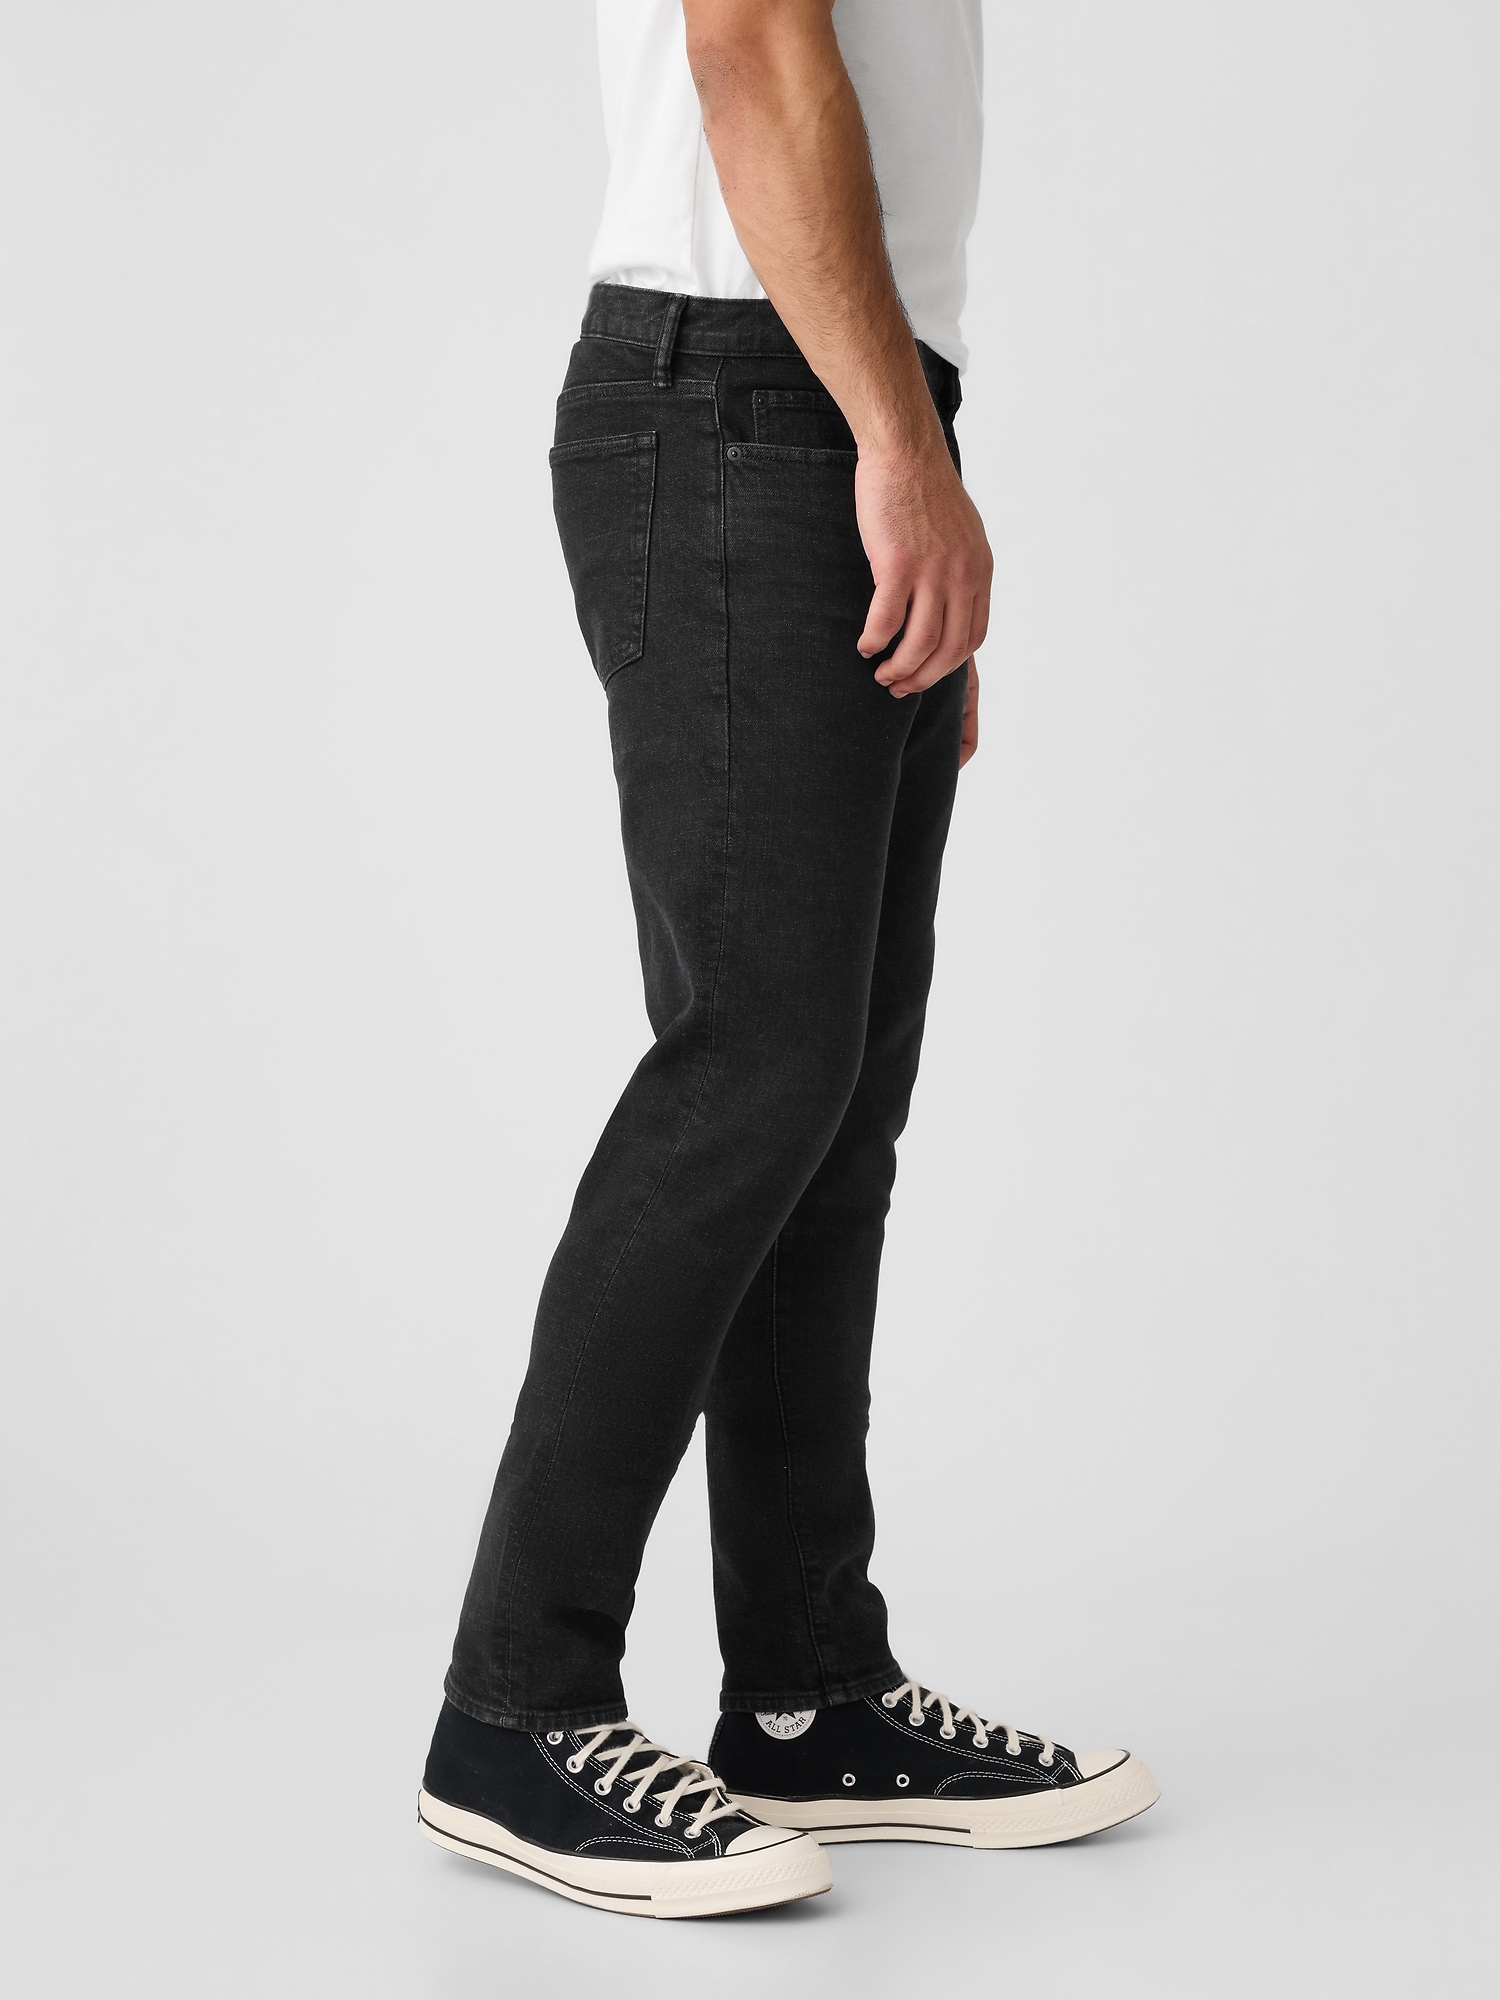 GAP Men's Gapflex Stretch Technology Slim Fit Denim Jeans